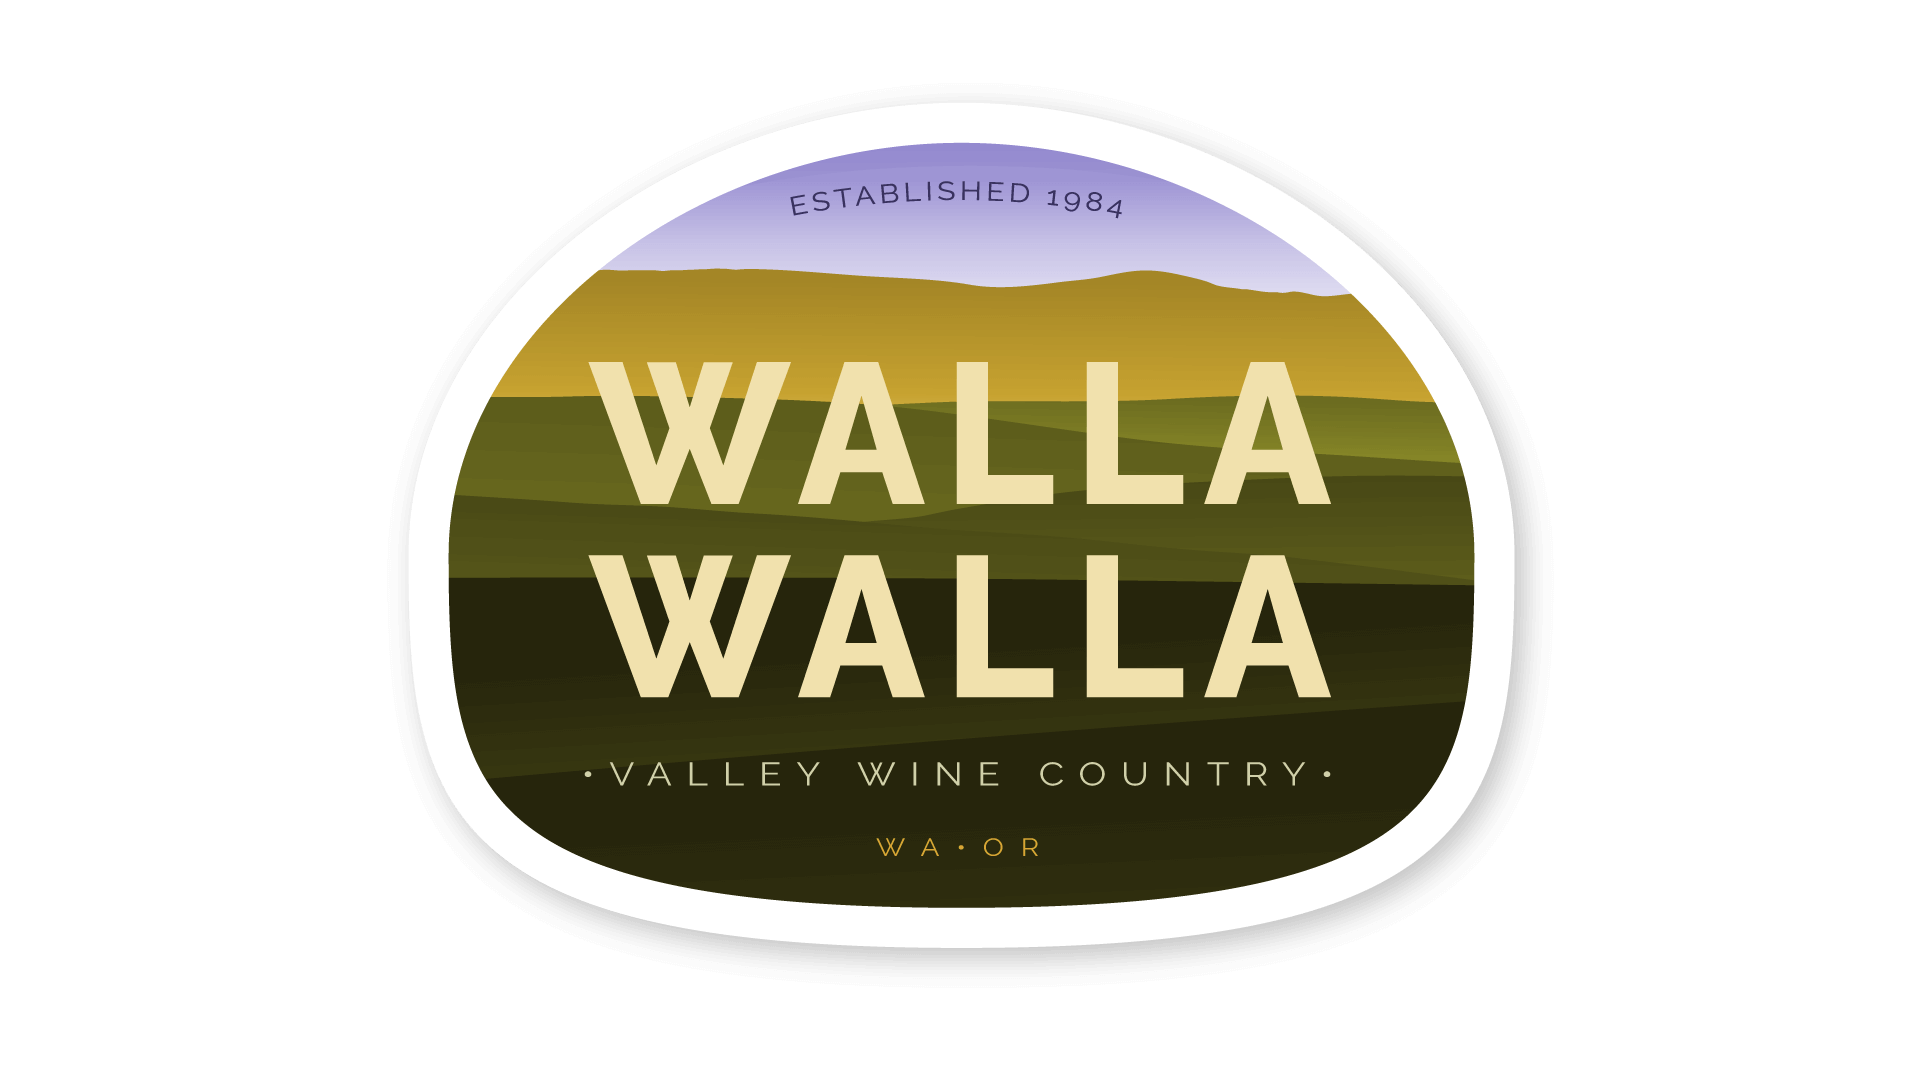 Walla Walla Valley Wine Country Guide Emblem - Wine Folly